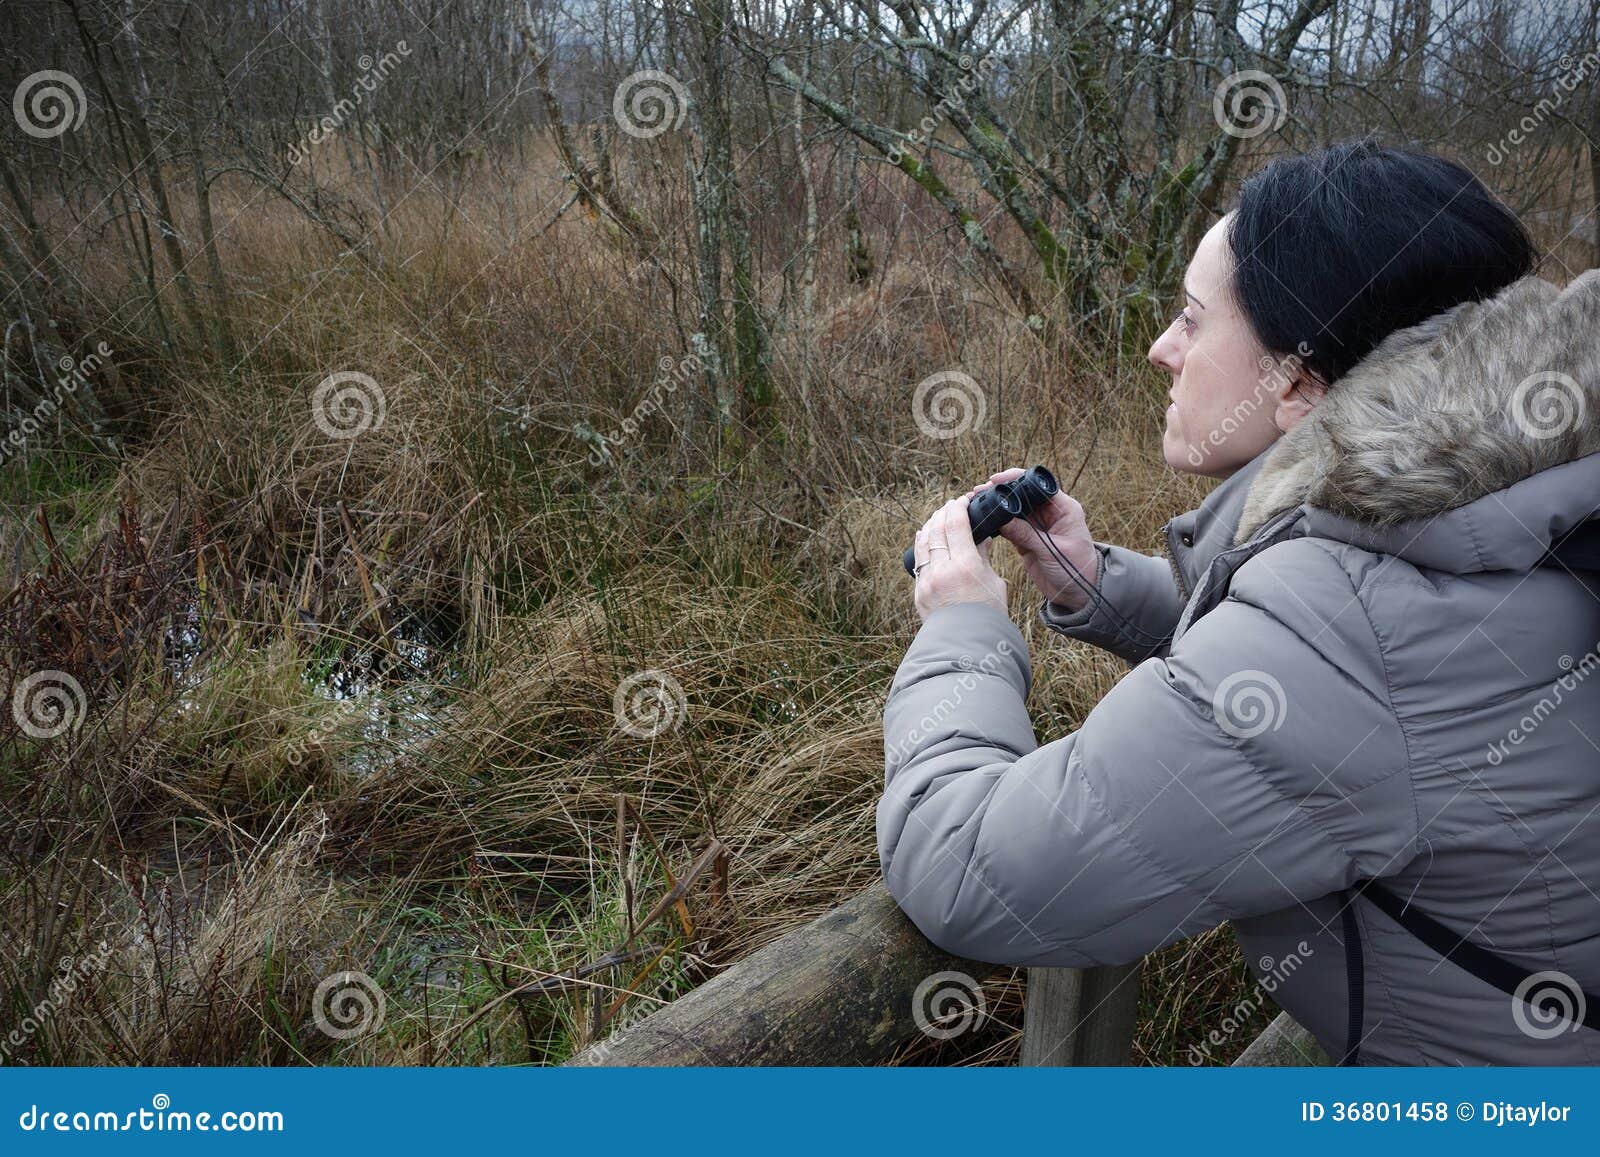 woman with binoculars birdwatching